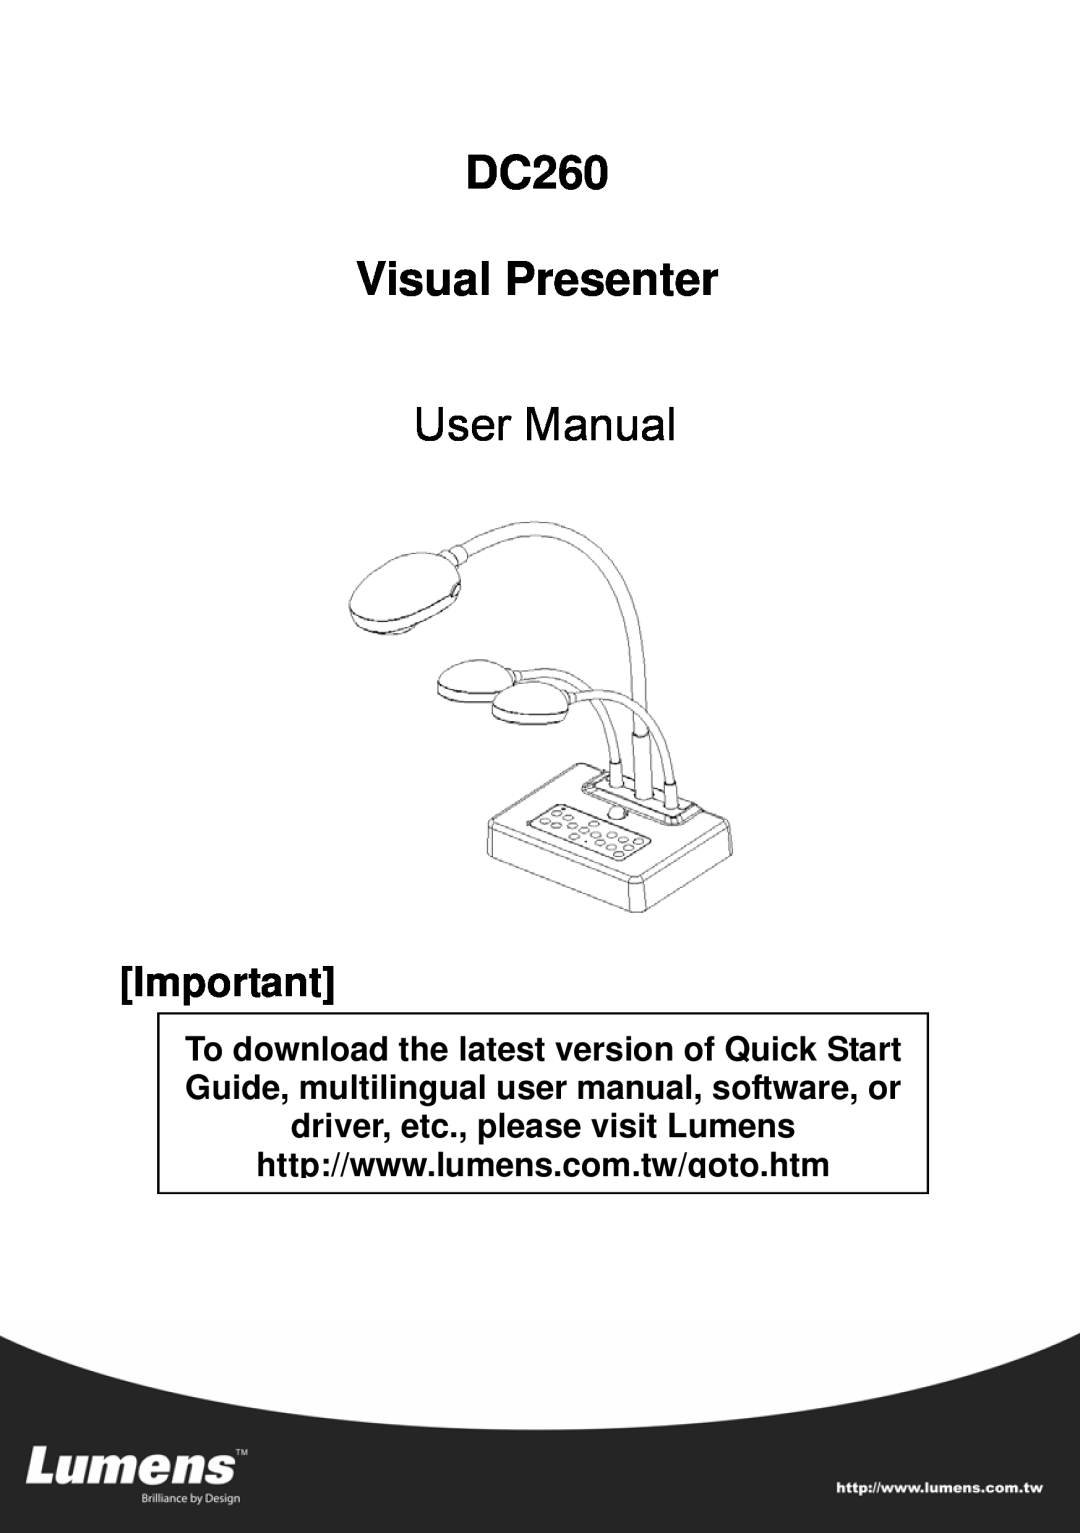 Lumens Technology user manual DC260 Visual Presenter, User Manual 